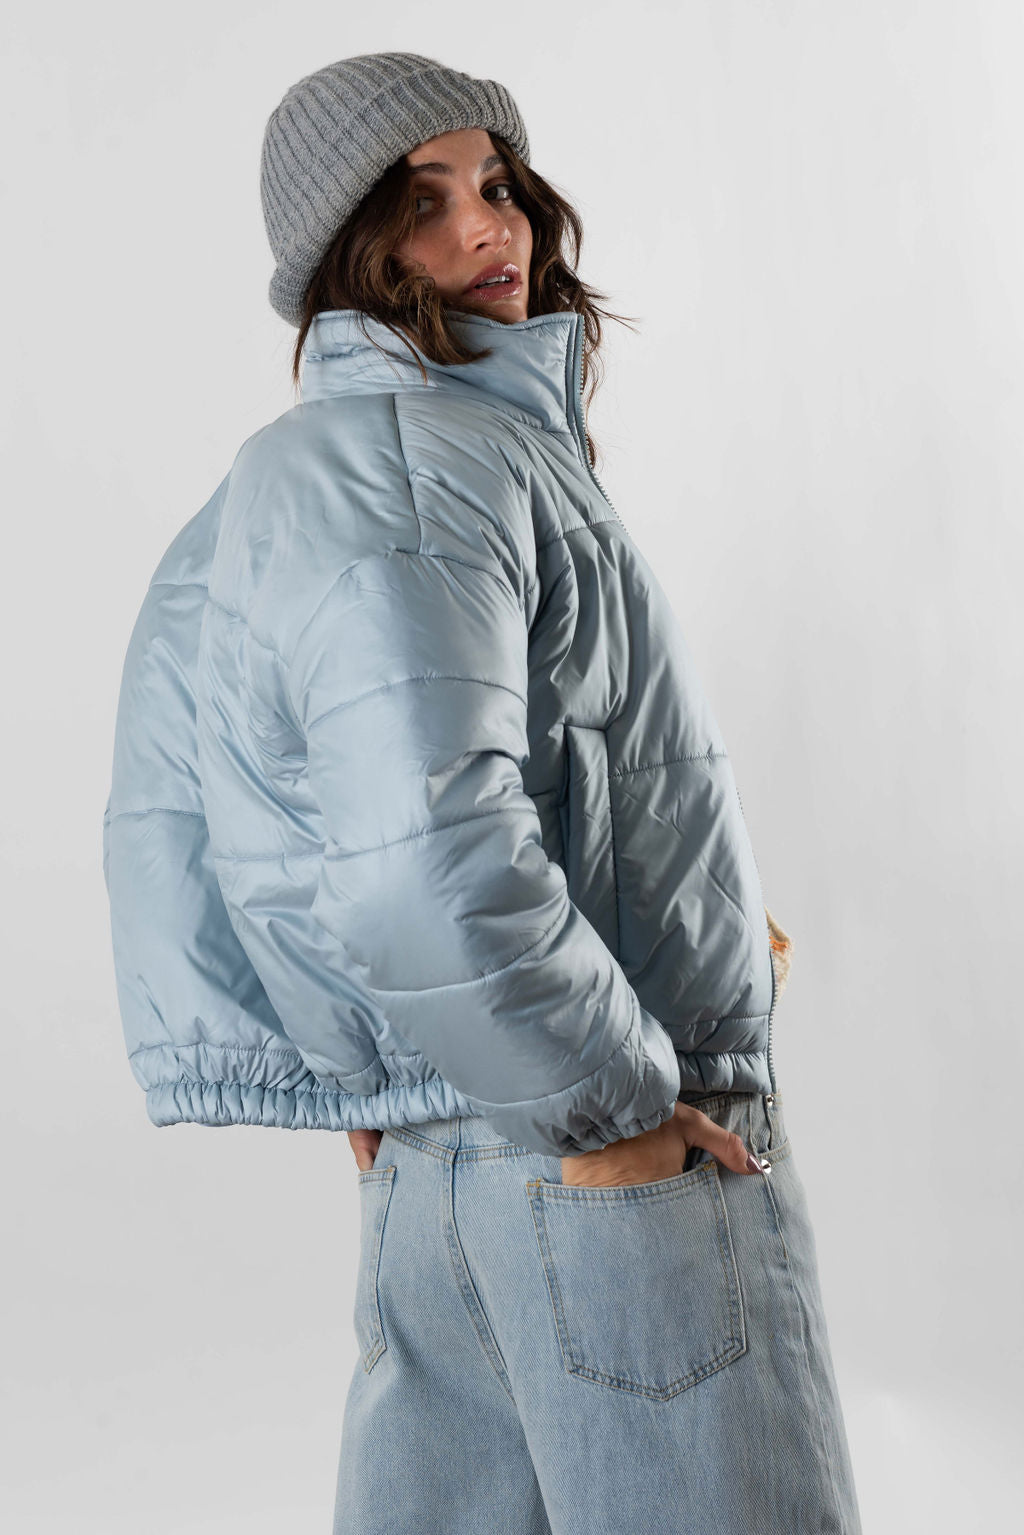 Navitas Tetra Long Puffer Jacket Brand New Winter Fishing Coat